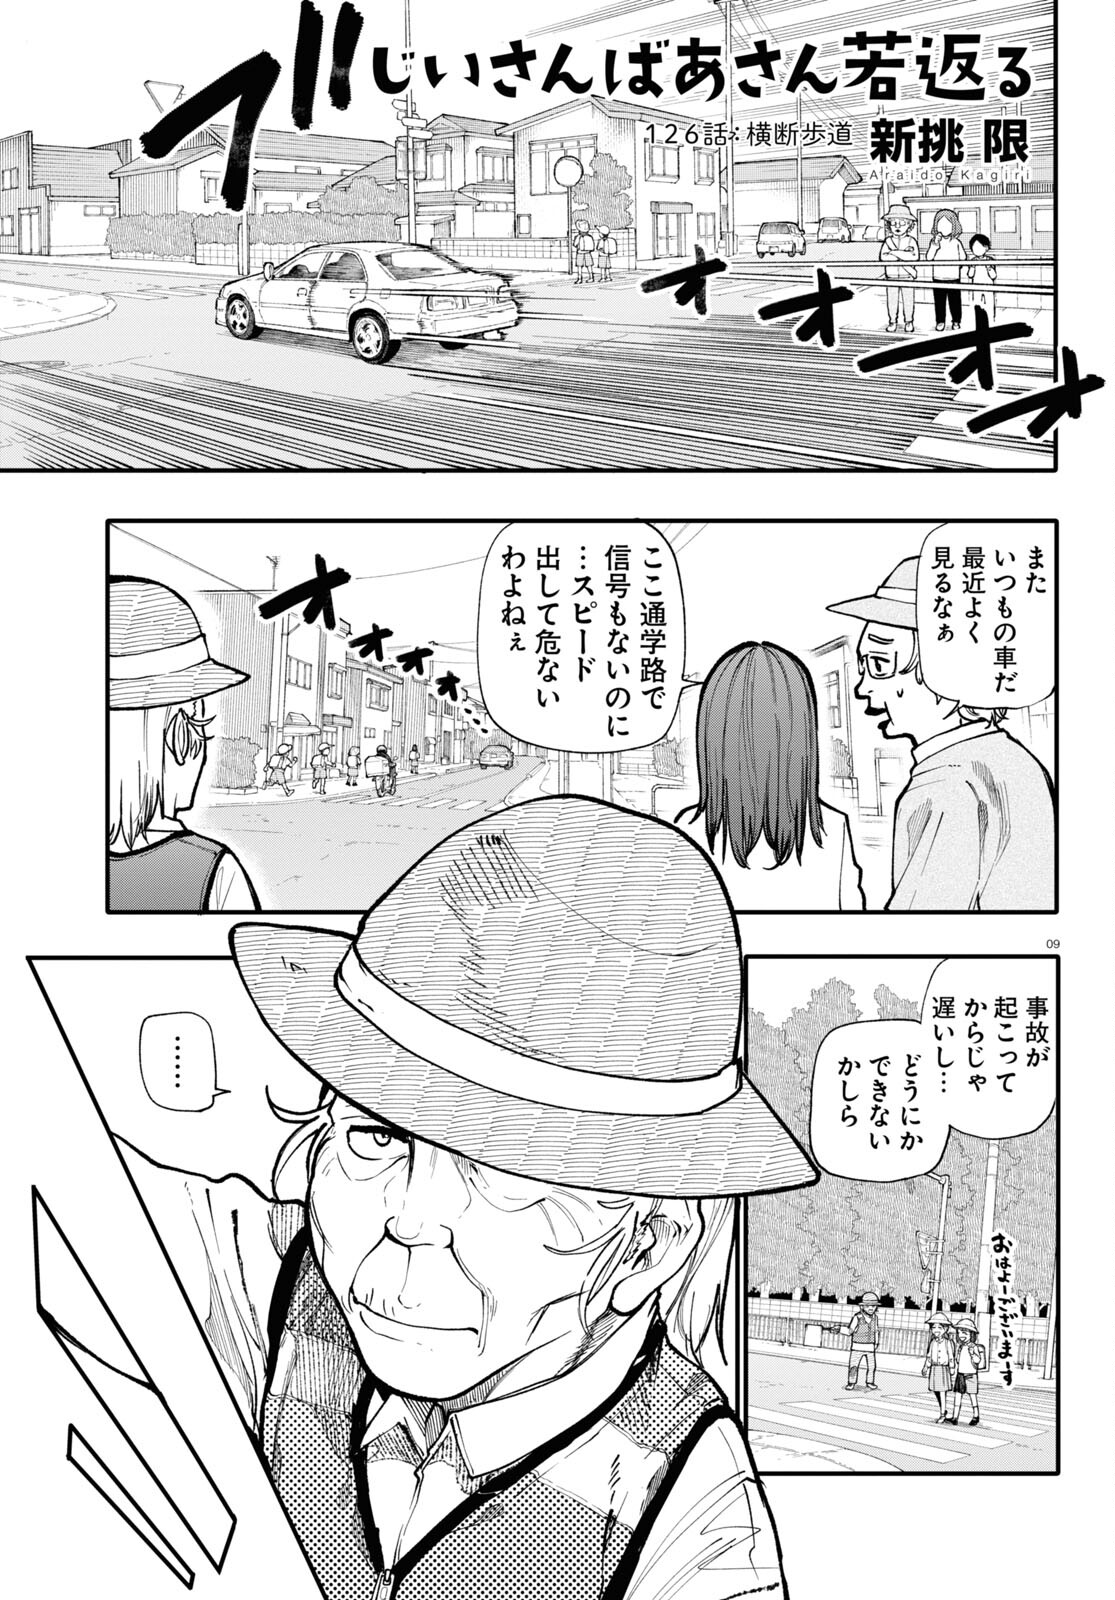 Ojii-san to Obaa-san ga Wakigaetta Hanashi - Chapter 126 - Page 9